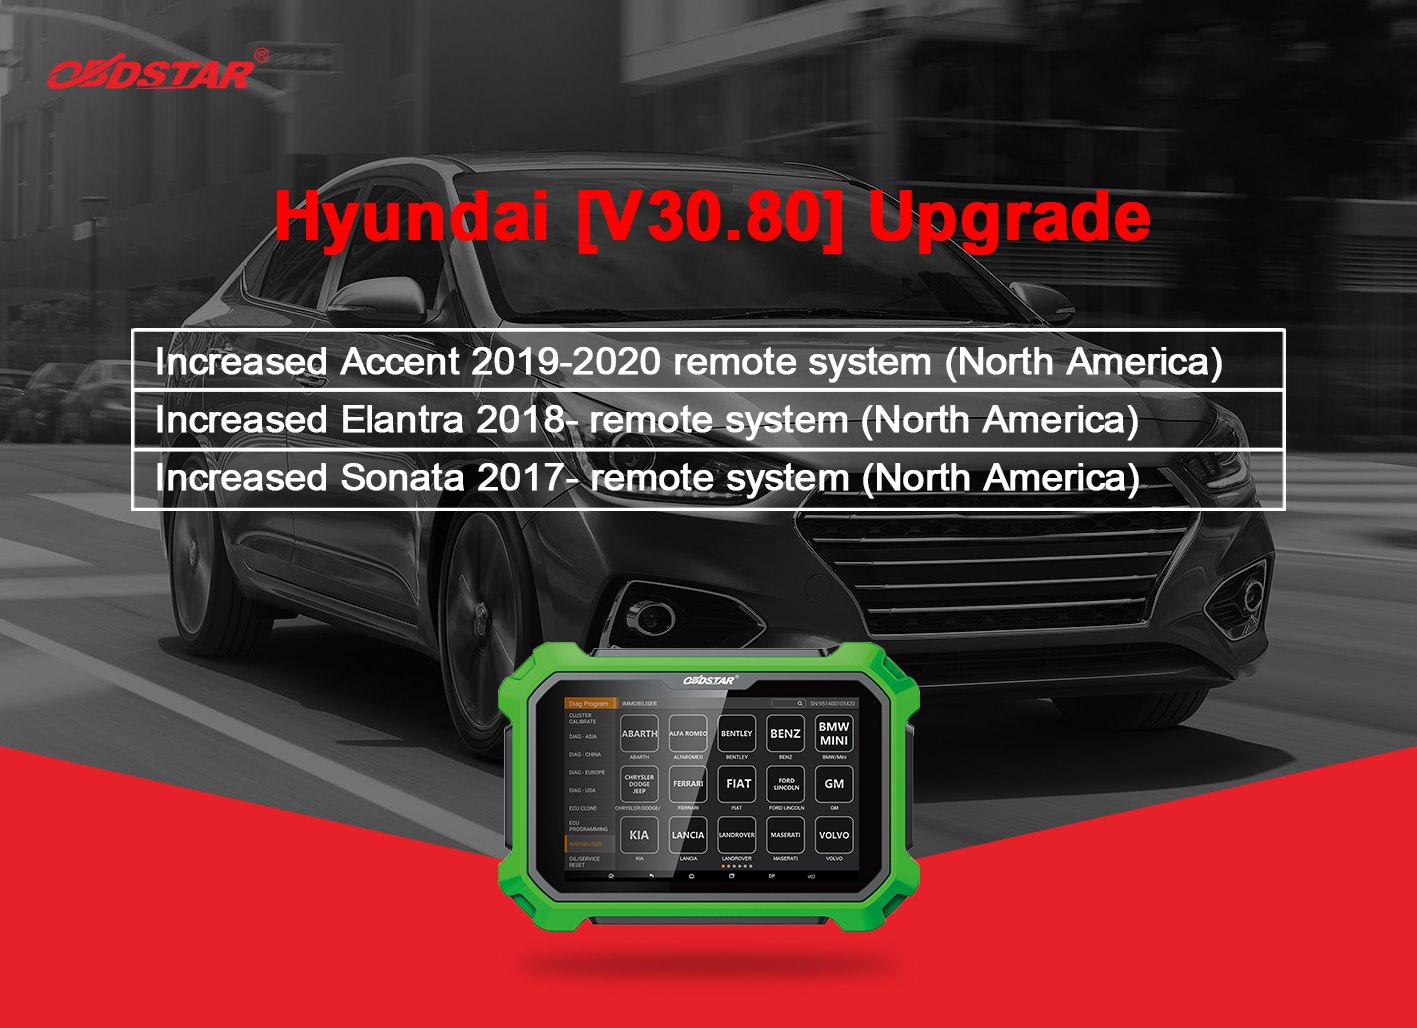 Hyundai v30.80 upgrade